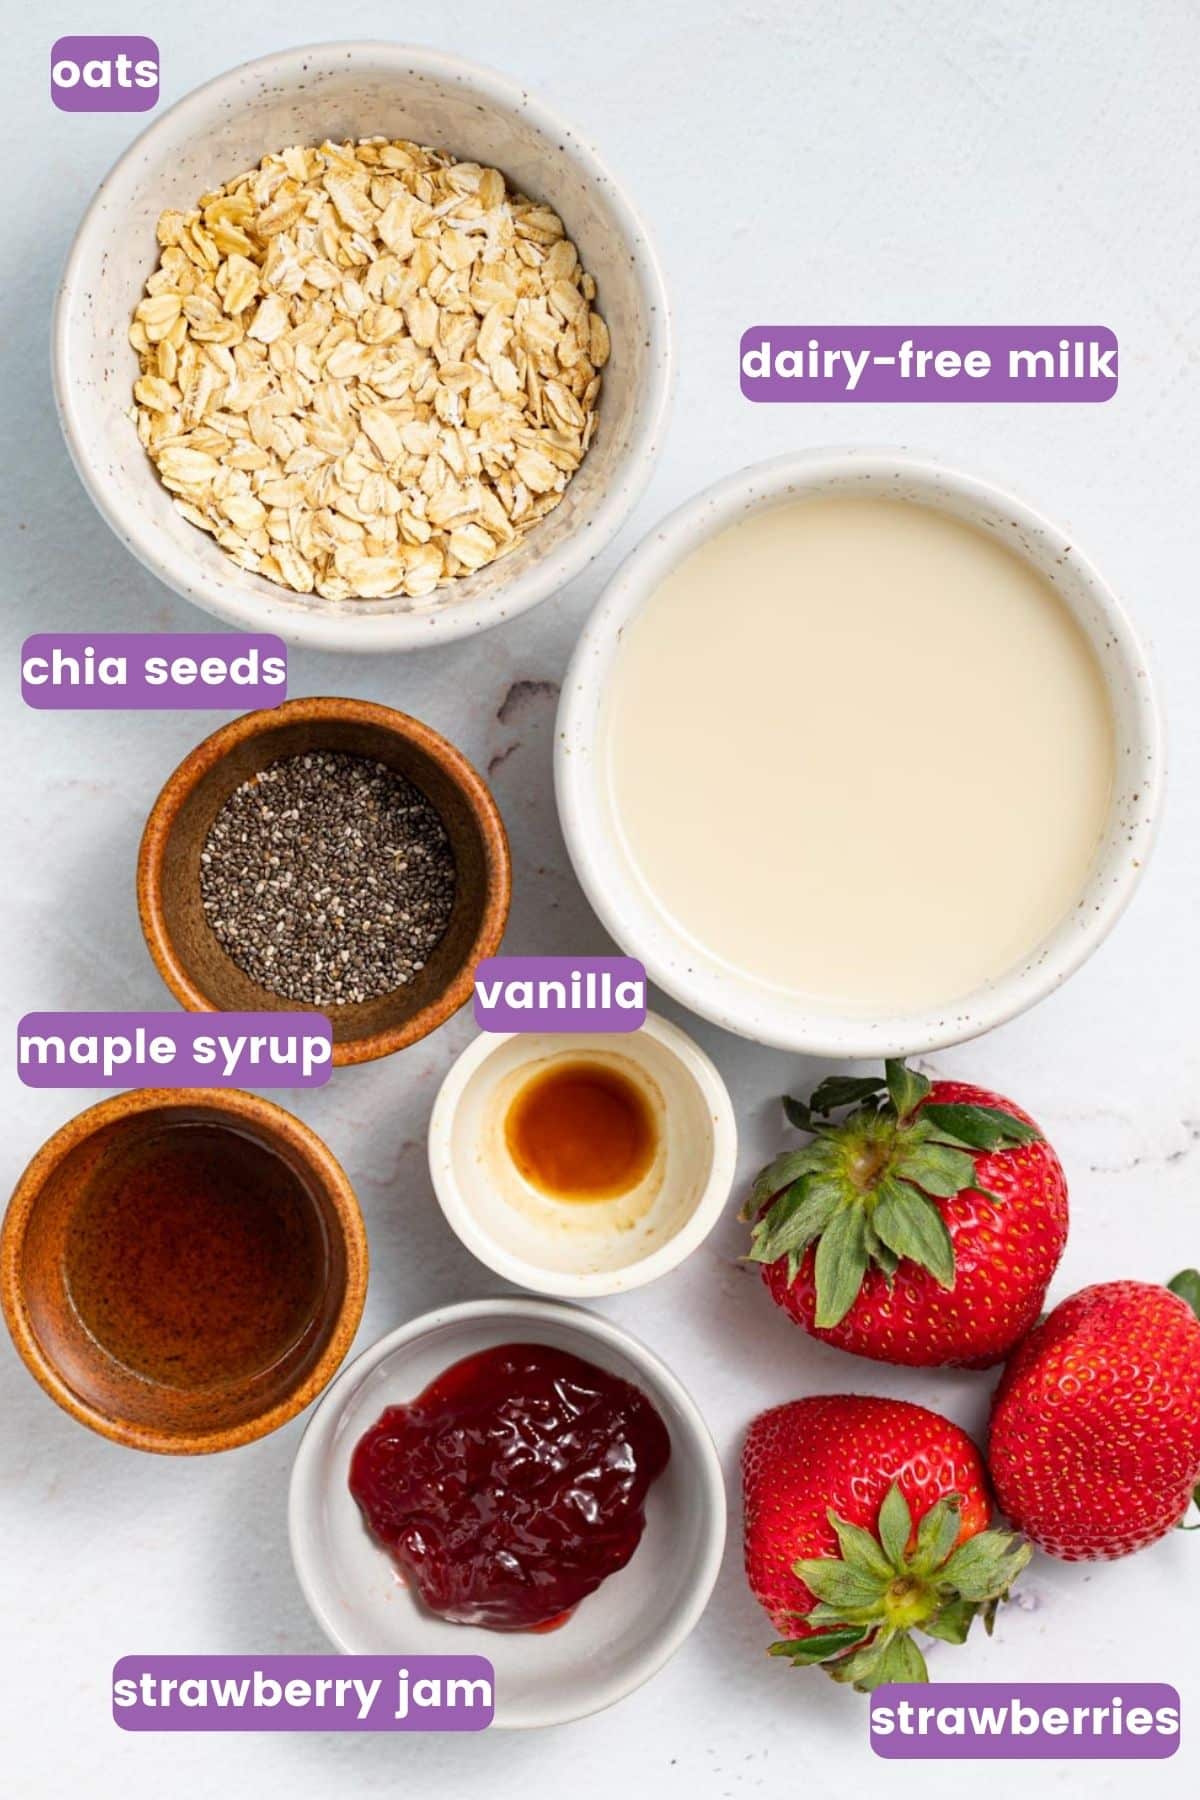 oats, dairy-free milk, chia seeds, maple syrup, vanilla, strawberry jam, strawberries. 